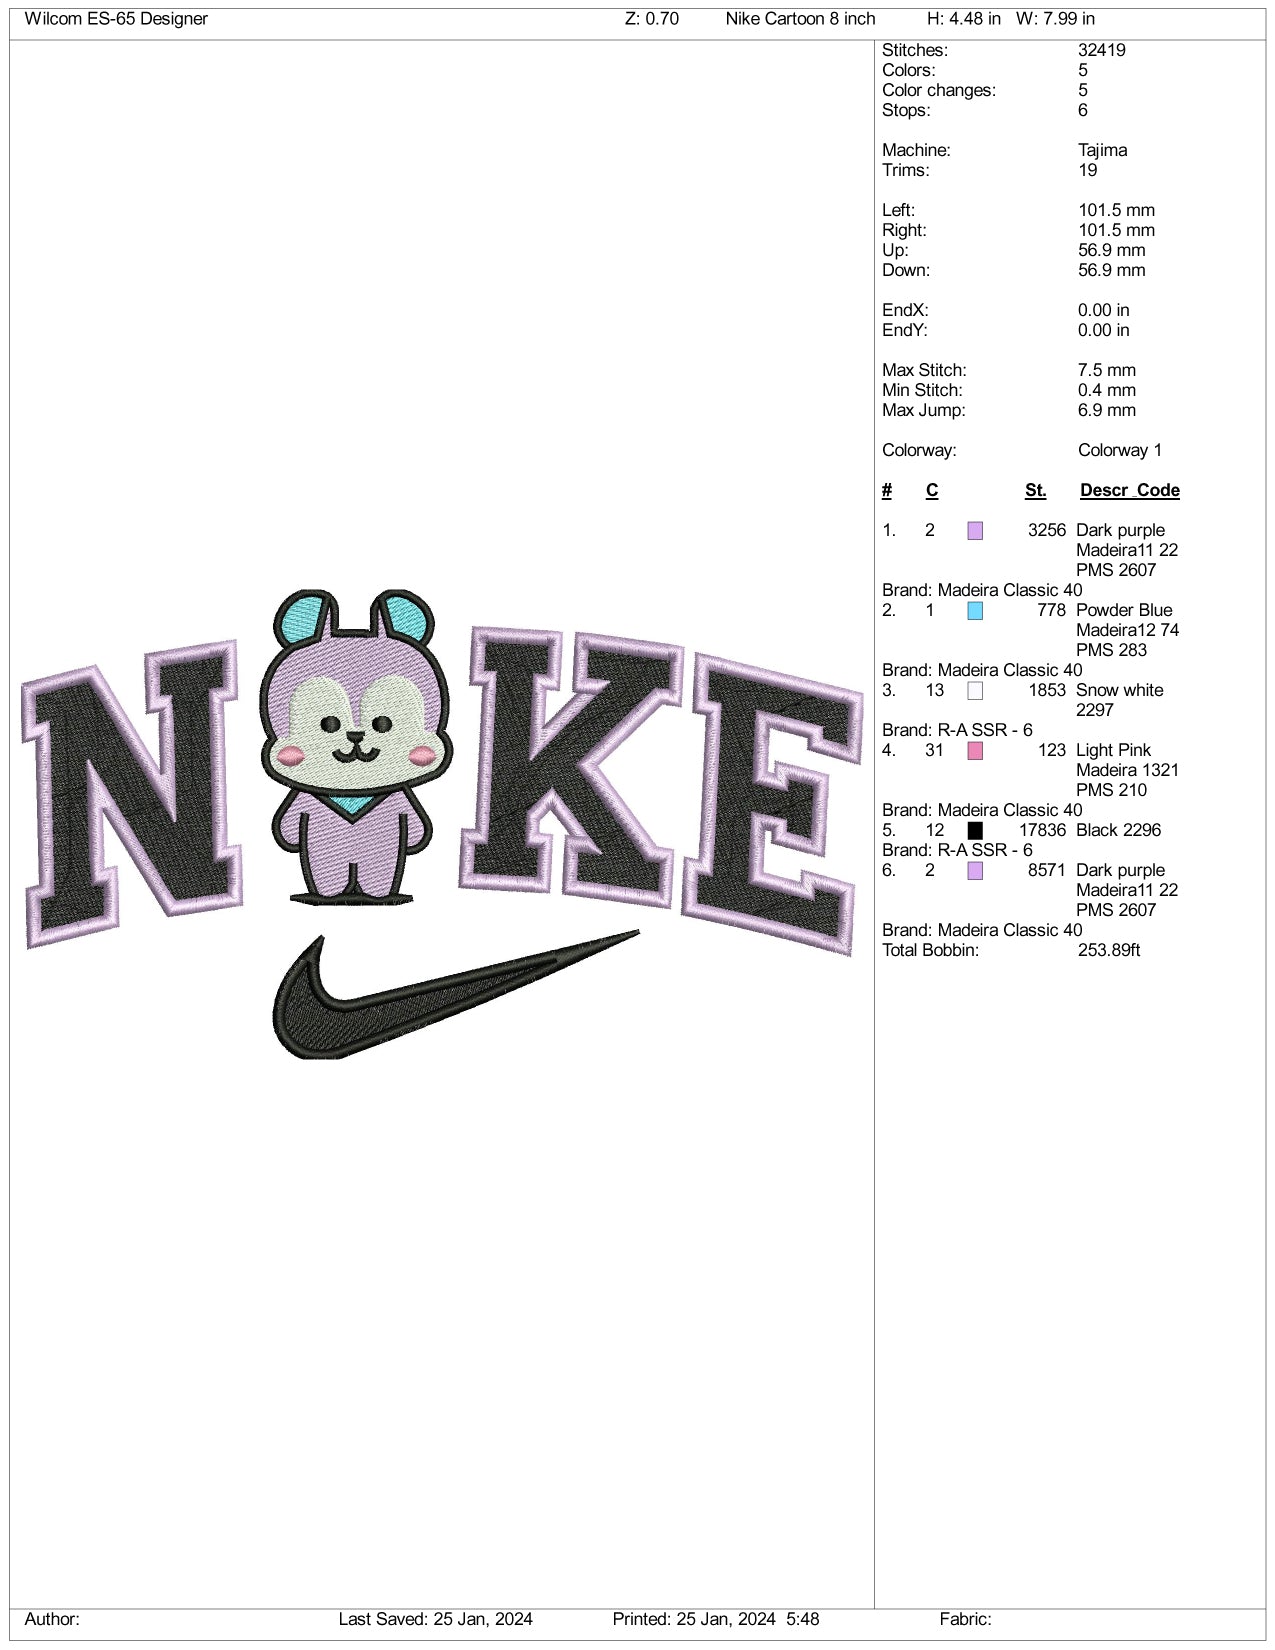 Nike Huimang Bear Embroidery Design Files - 3 Size's